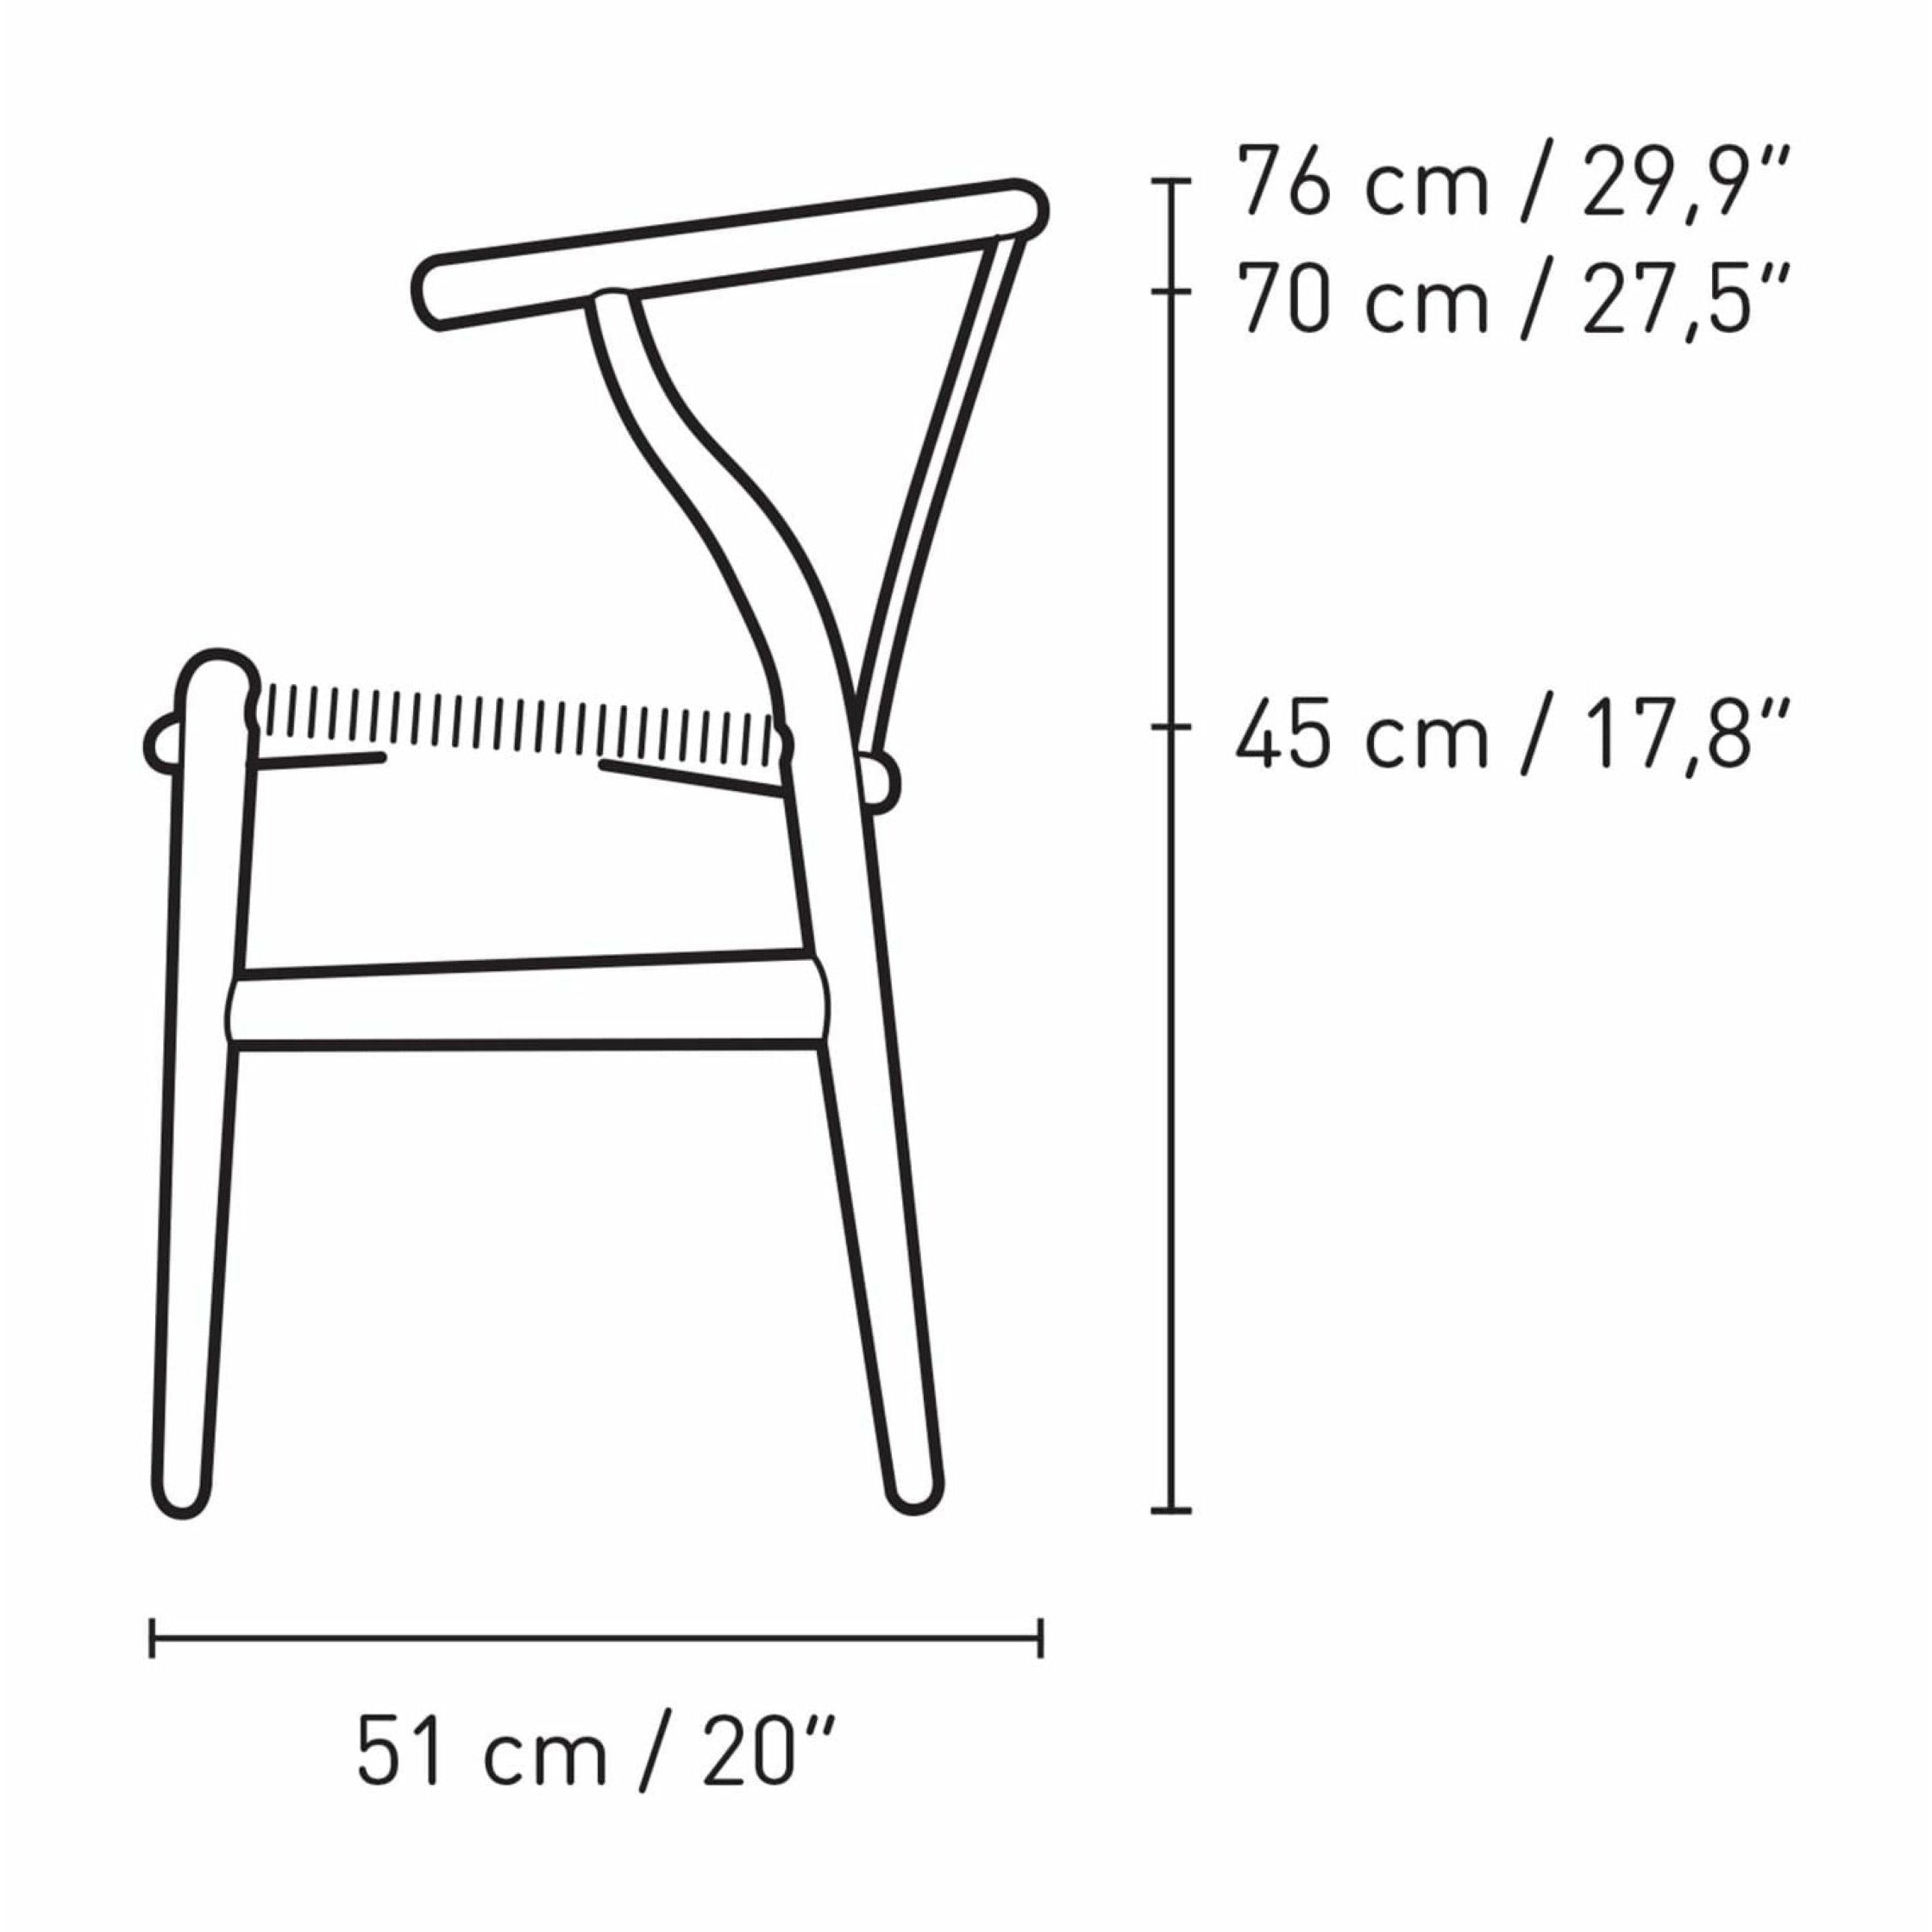 Carl Hansen Ch24 Wishbone Chair Oak, Pewter Blue/Natural Cord Special Edition